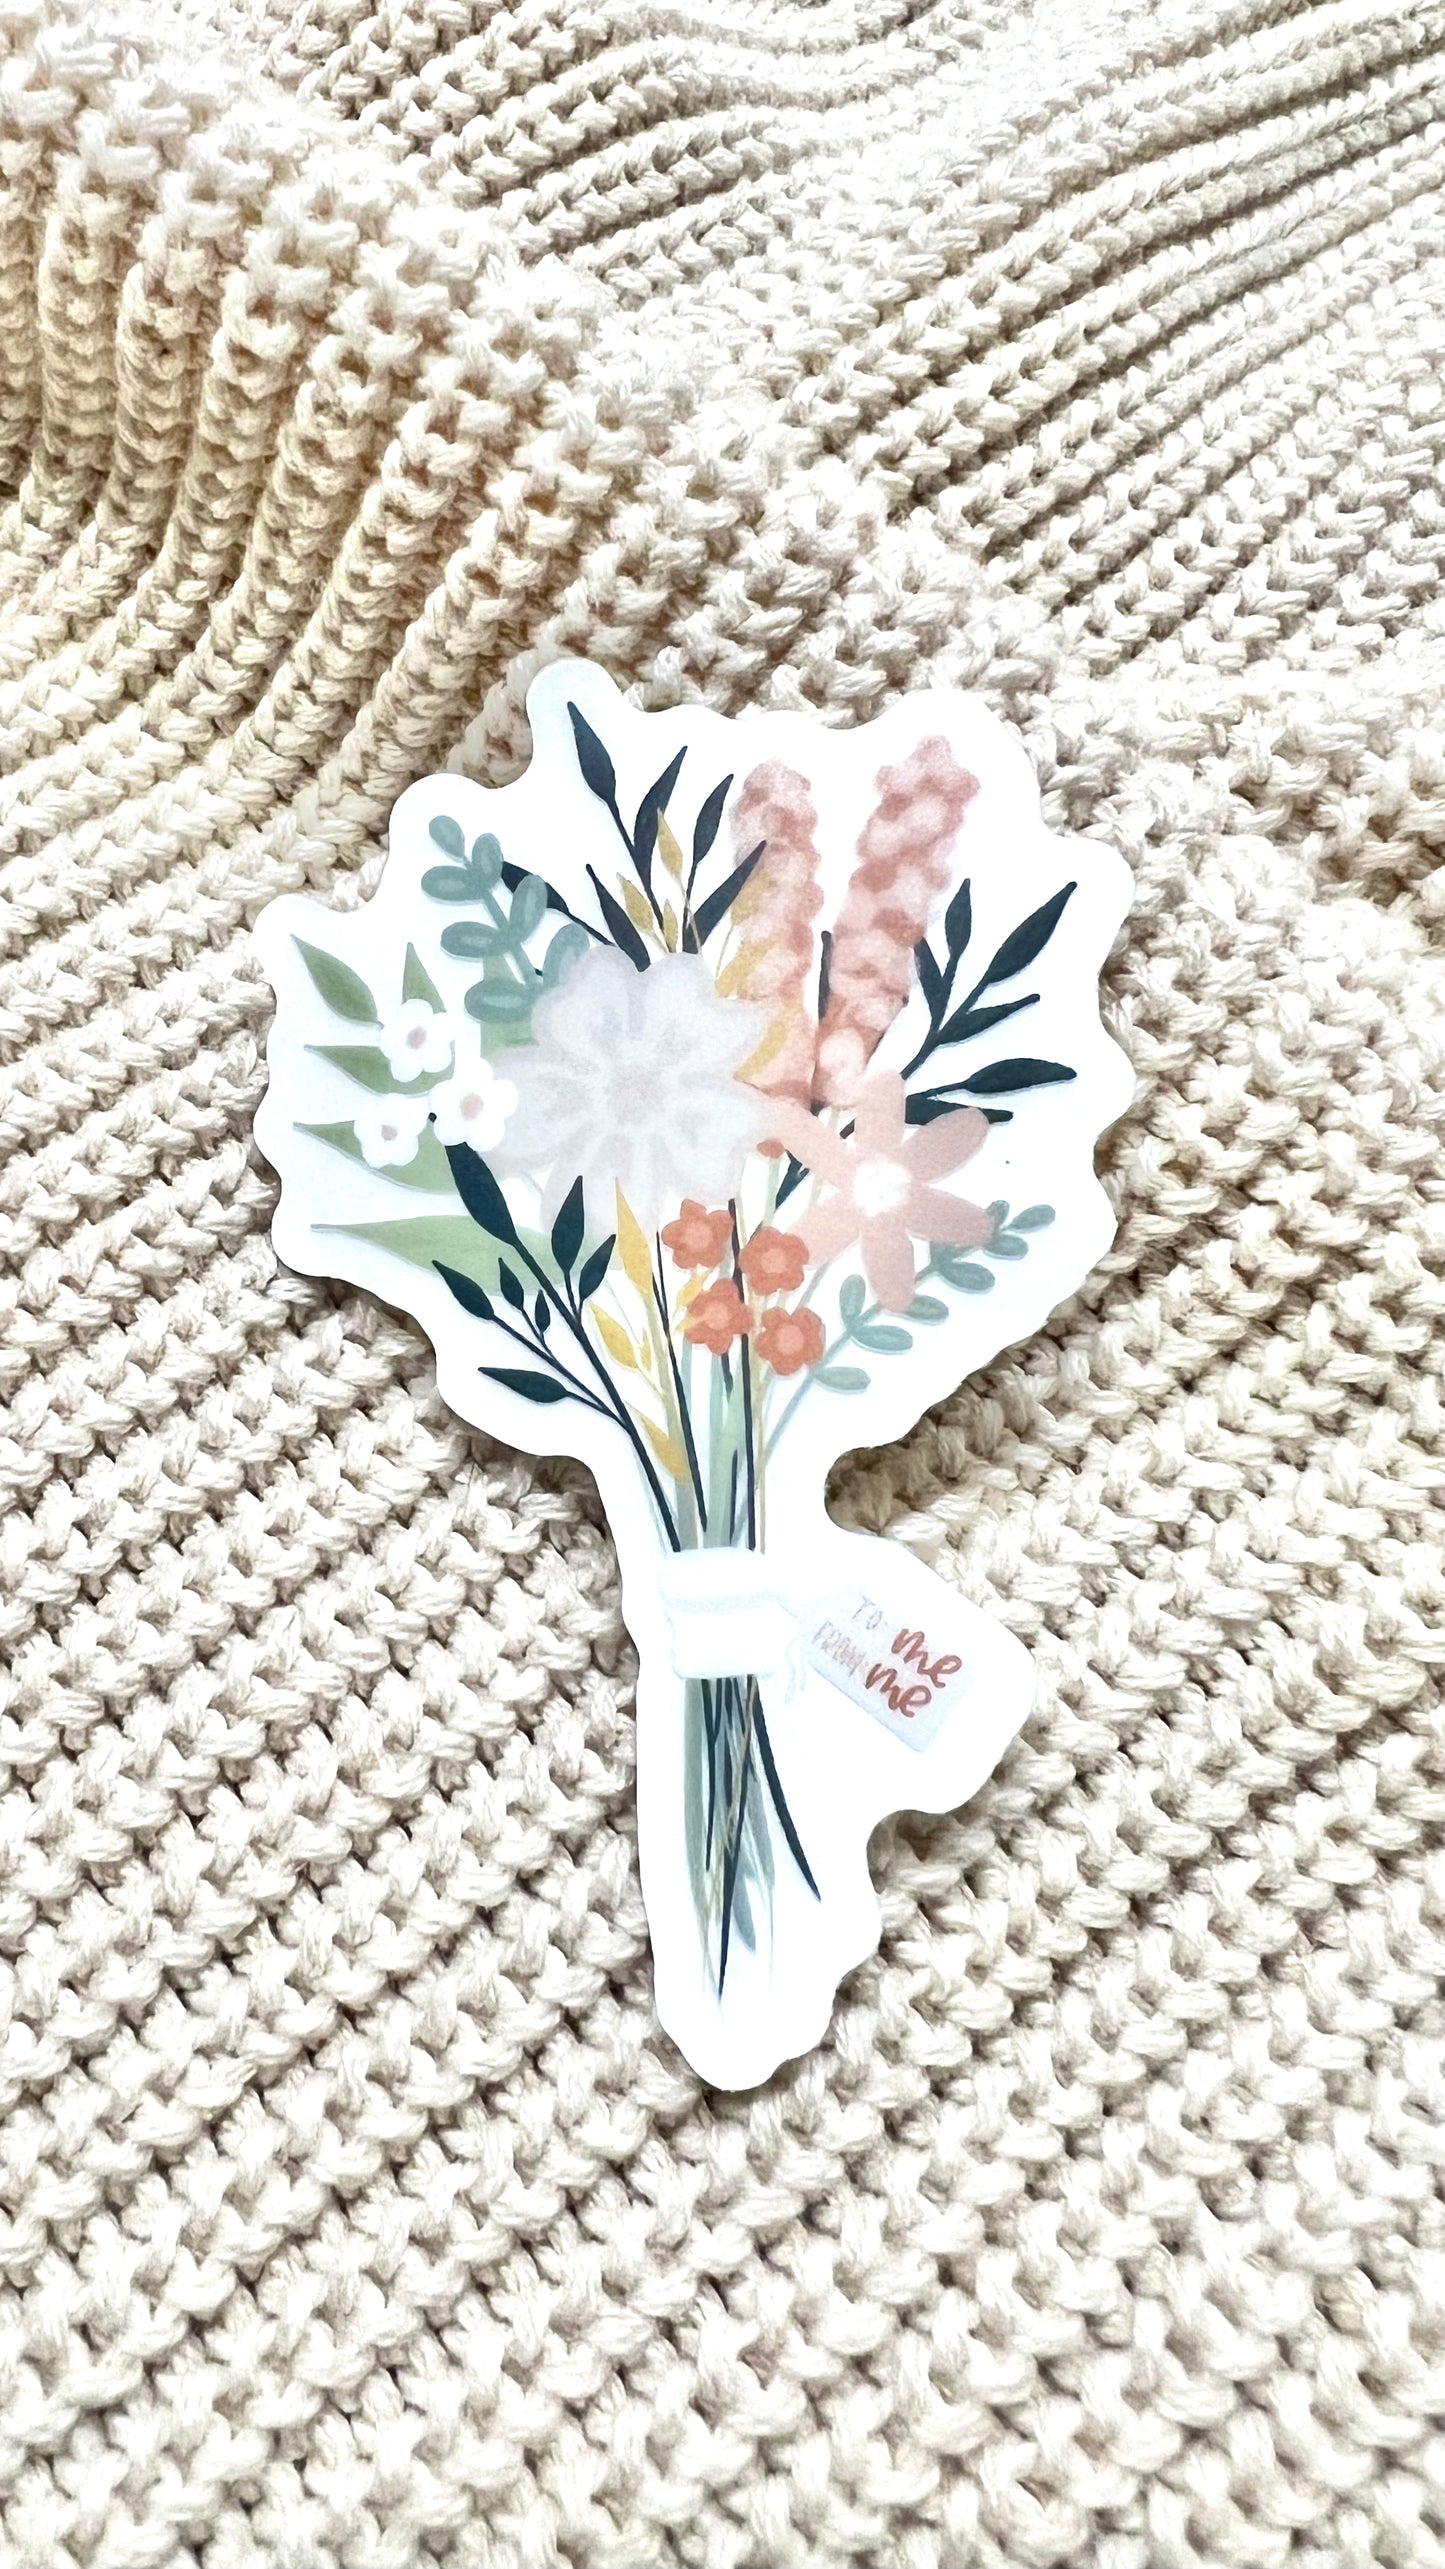 Flower Bouquet Sticker. Weatherproof Sticker. 3 inch Clear Vinyl Matte Sticker. Flowers, Self Love, Motivation.